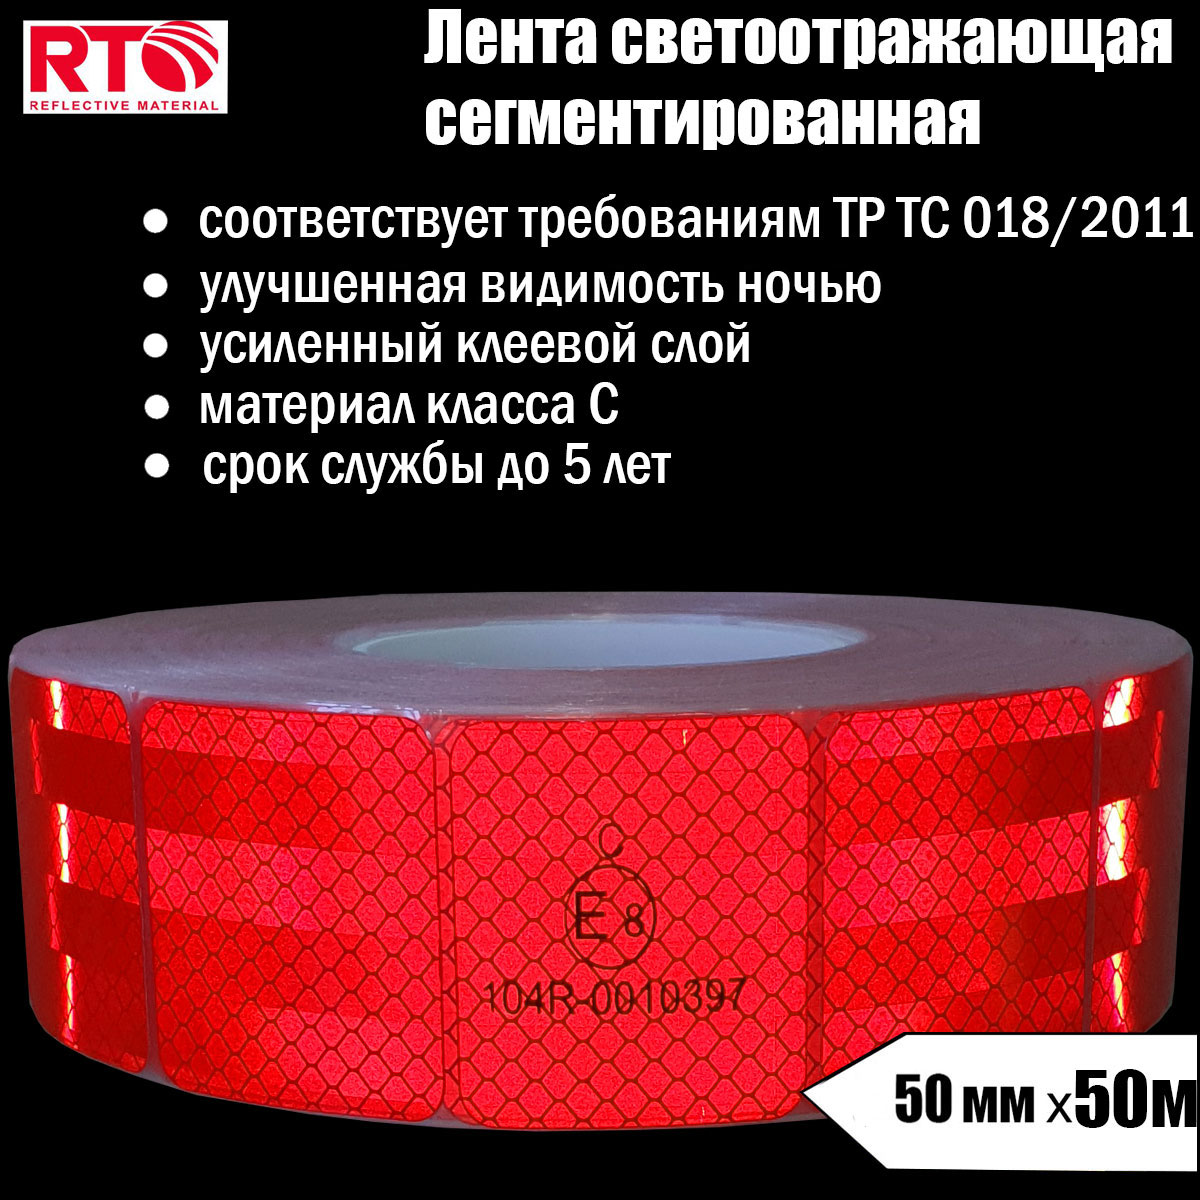 Лента светоотражающая сегментированная RTLITE RT-V104 для контурной маркировки, 50мм х 50м лента светоотражающая для контурной маркировки rtlite rt v104 50 8 мм х 5 м желтая